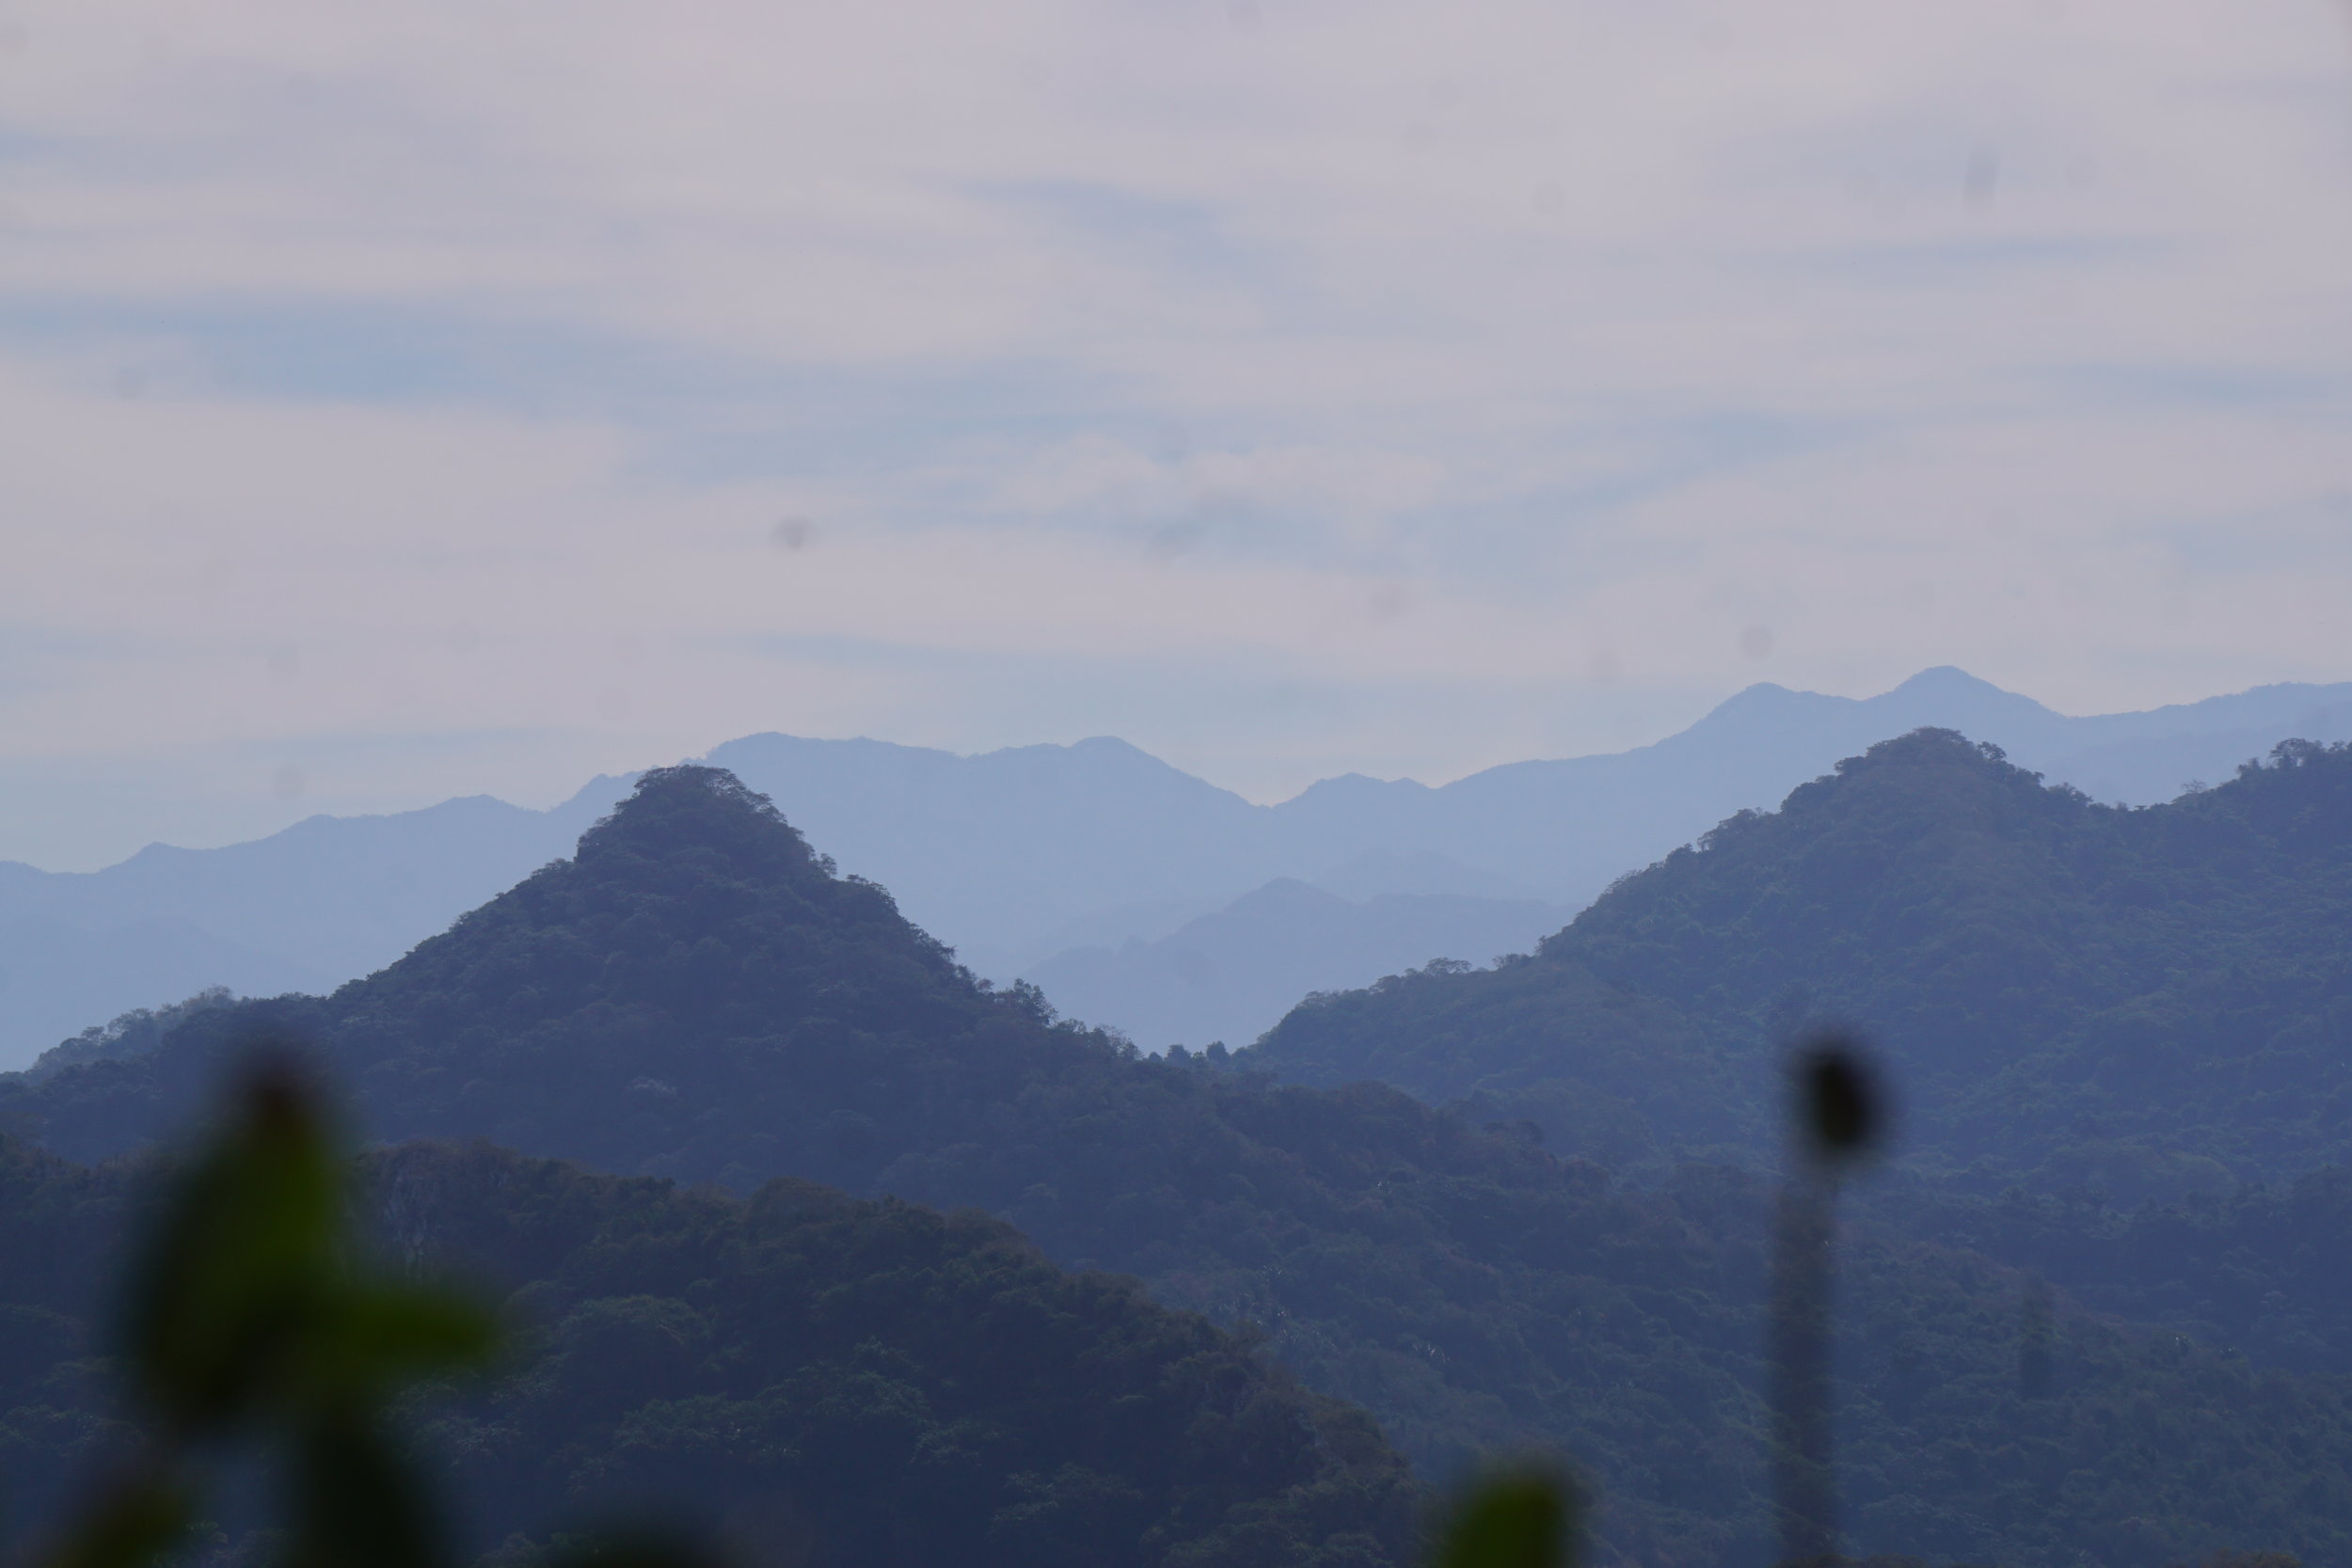  View from monkey mountains sayulita running